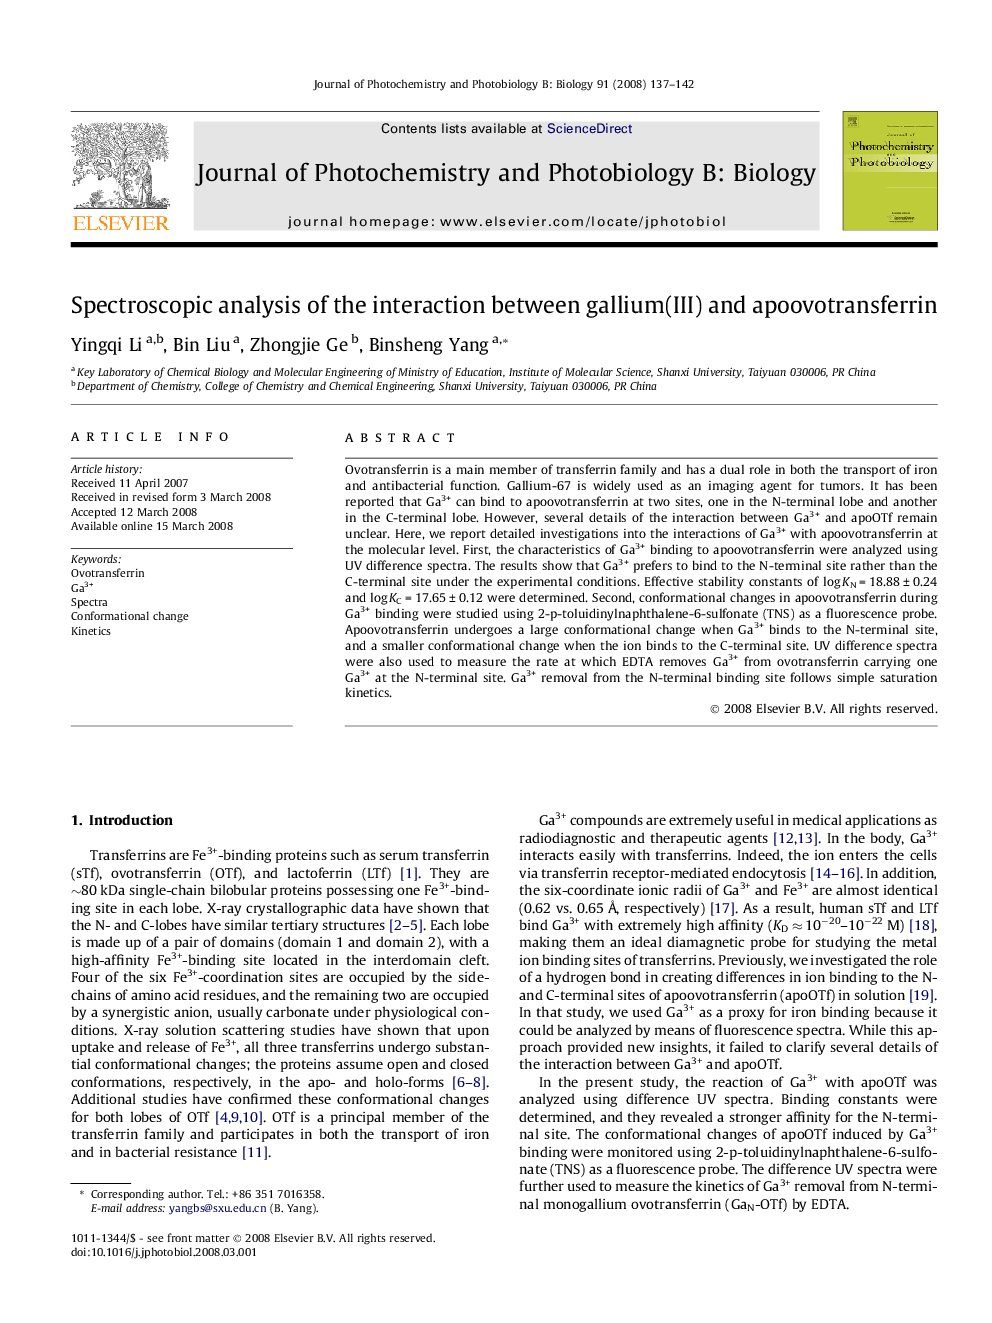 Spectroscopic analysis of the interaction between gallium(III) and apoovotransferrin